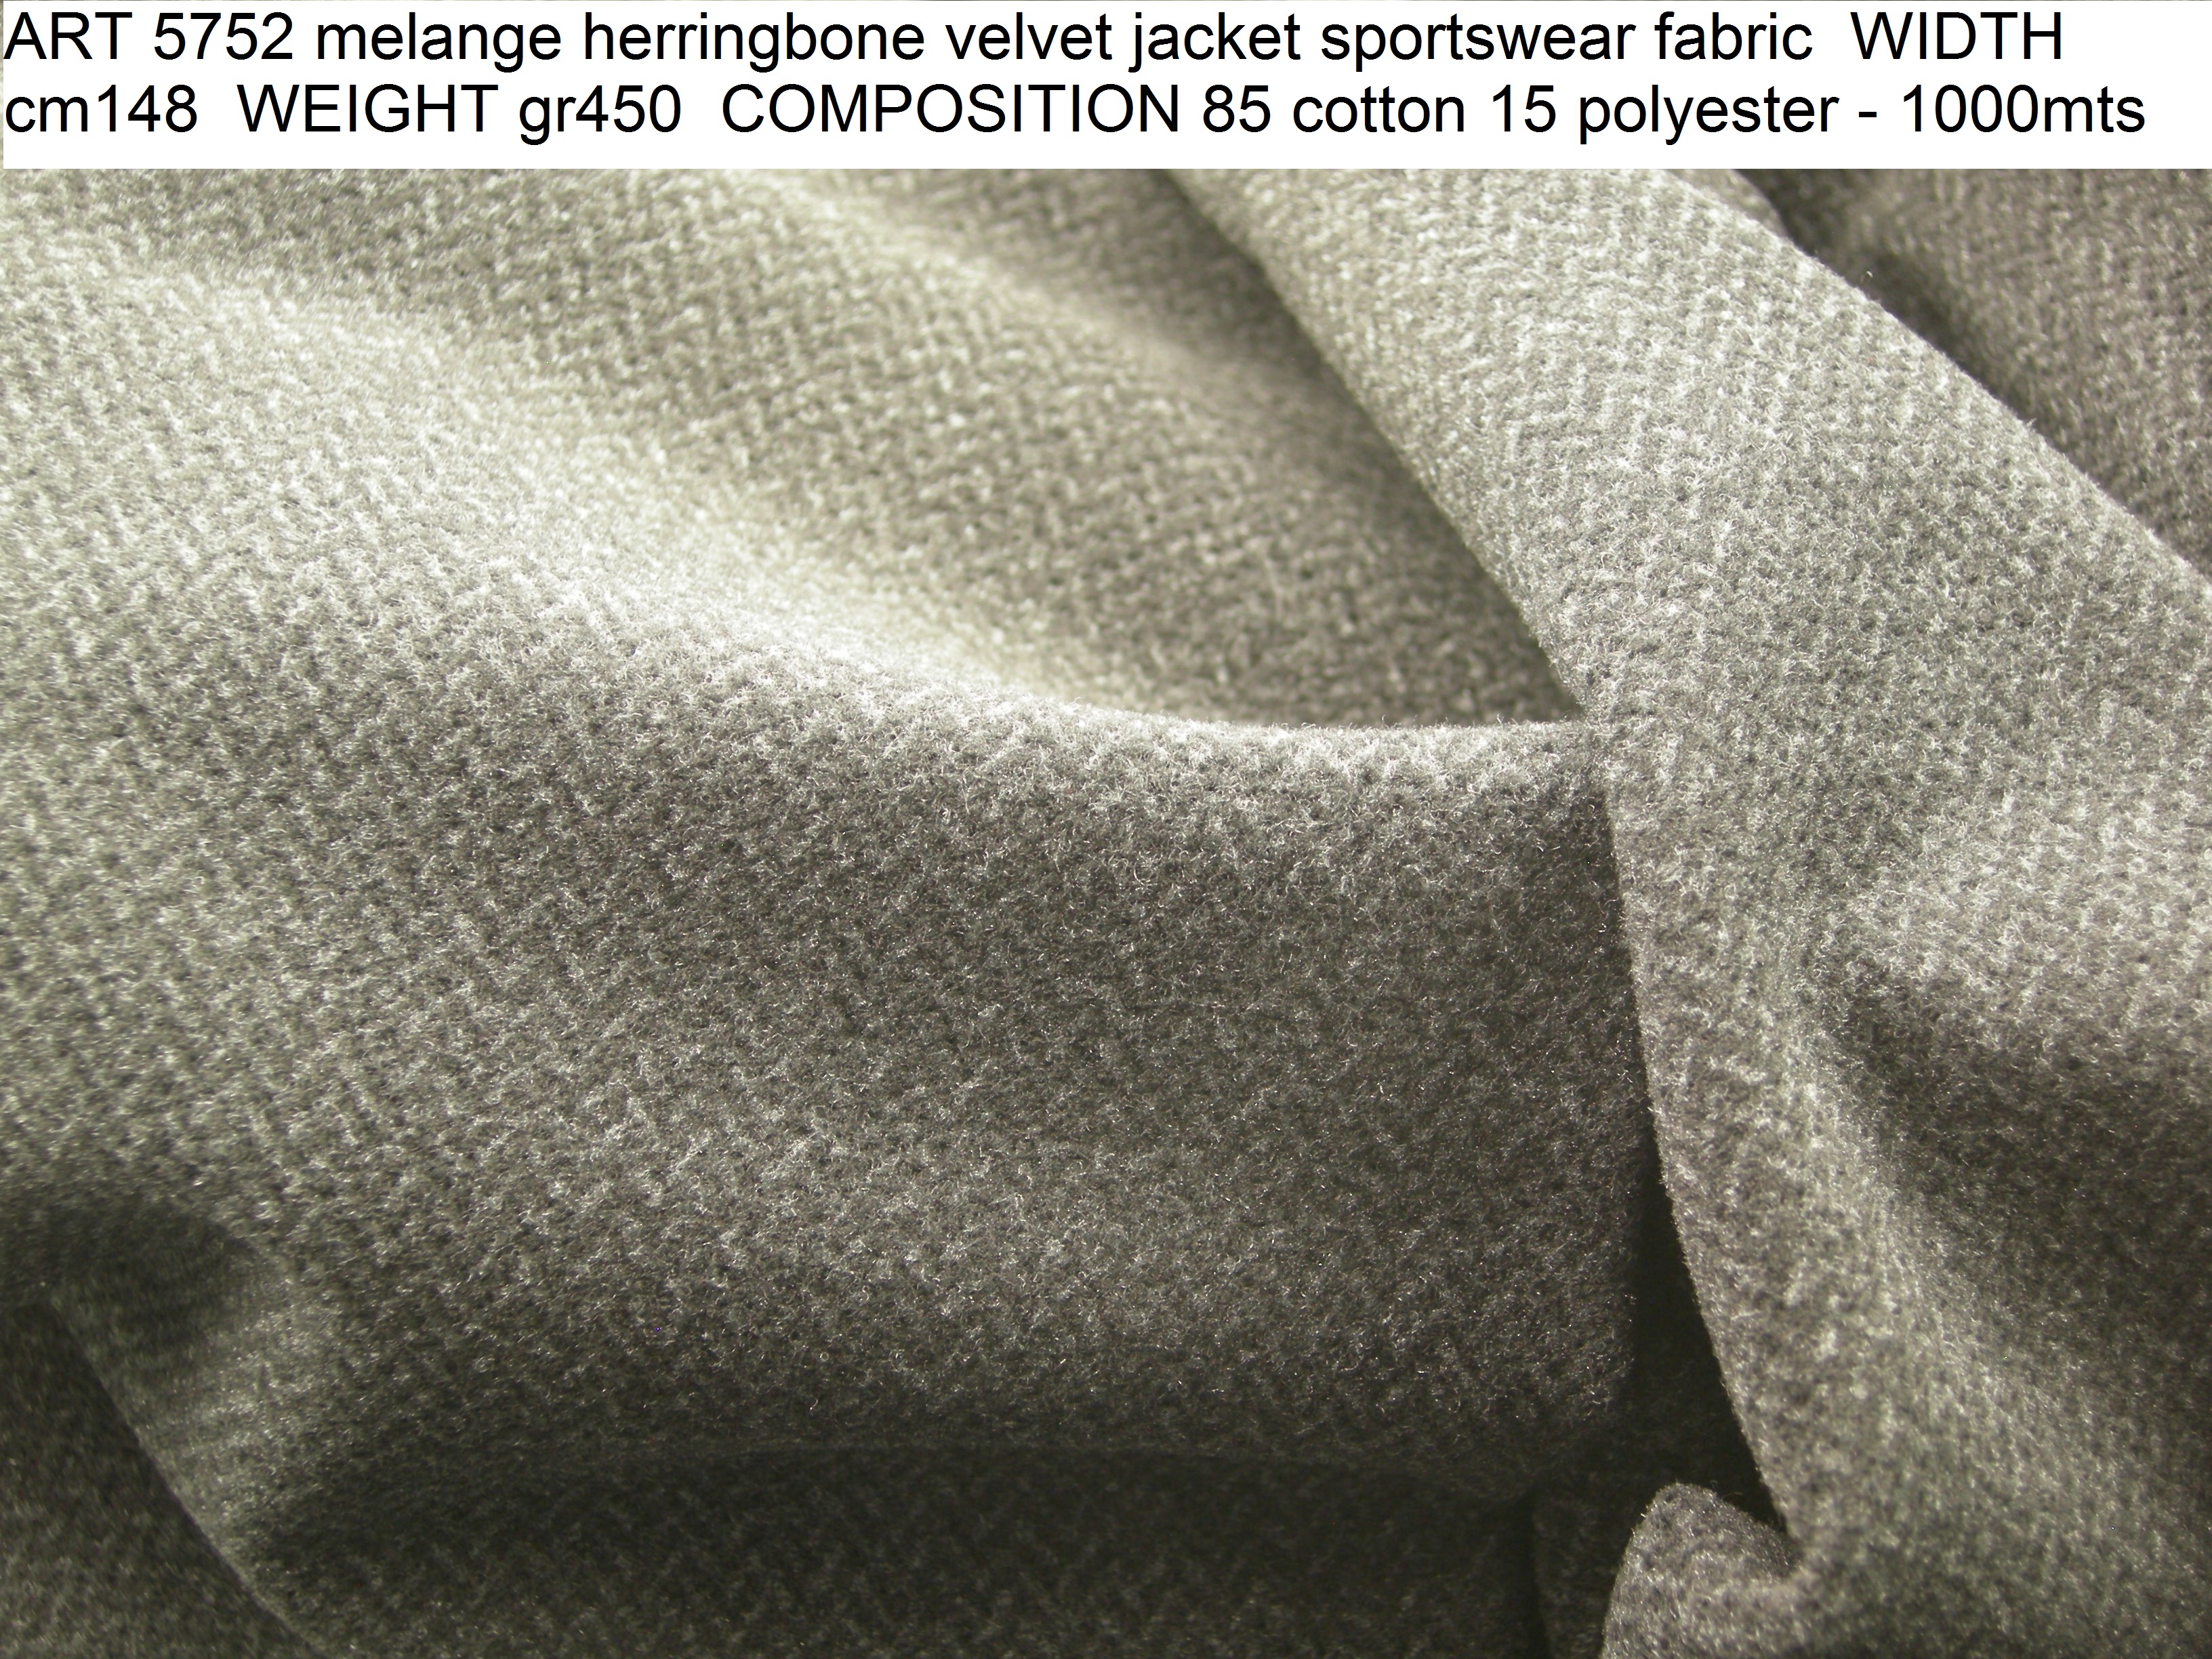 ART 5752 melange herringbone velvet jacket sportswear fabric WIDTH cm148 WEIGHT gr450 COMPOSITION 85 cotton 15 polyester - 1000mts